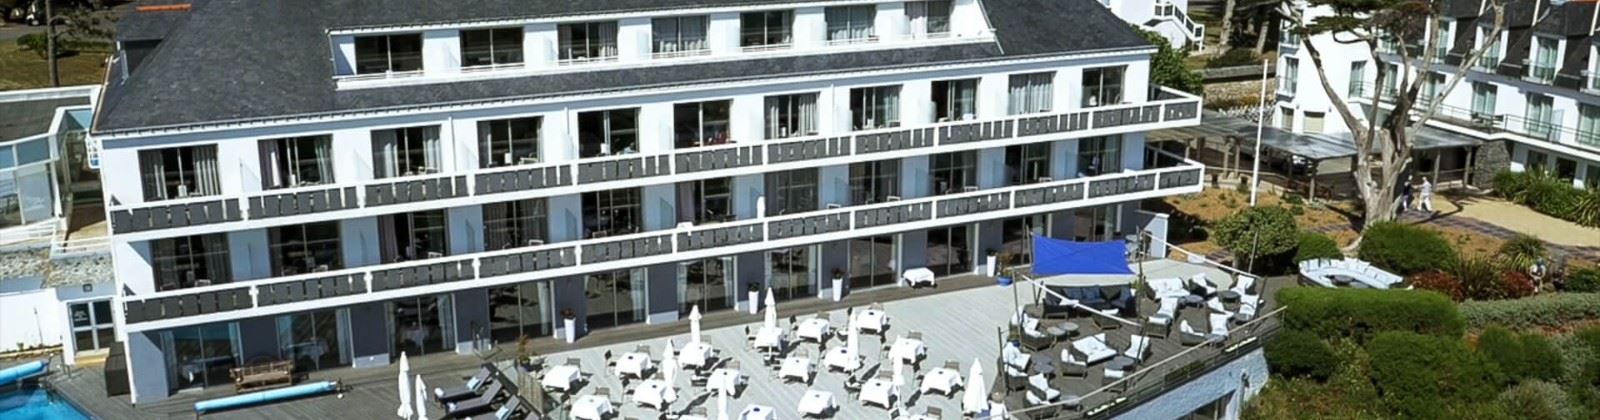 castel clara olevene hotel restaurant conference booking 